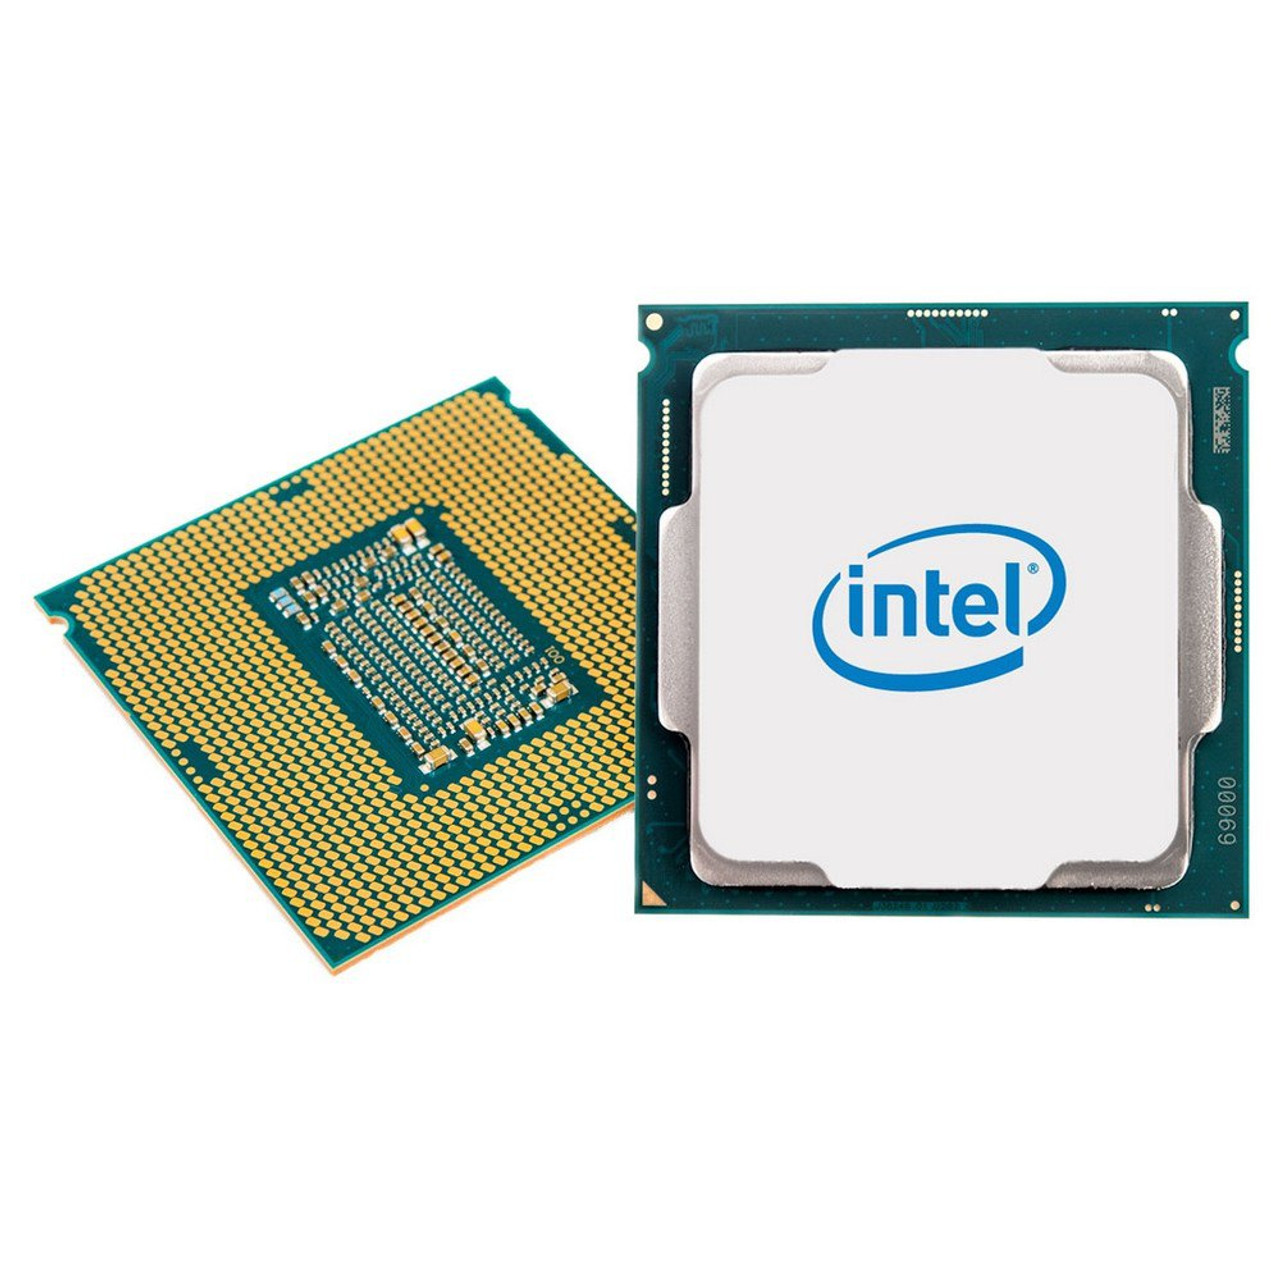 Intel SLBV5 Xeon X5680 3.33 GHz 6.4 GT/s - Velocity Tech Solutions